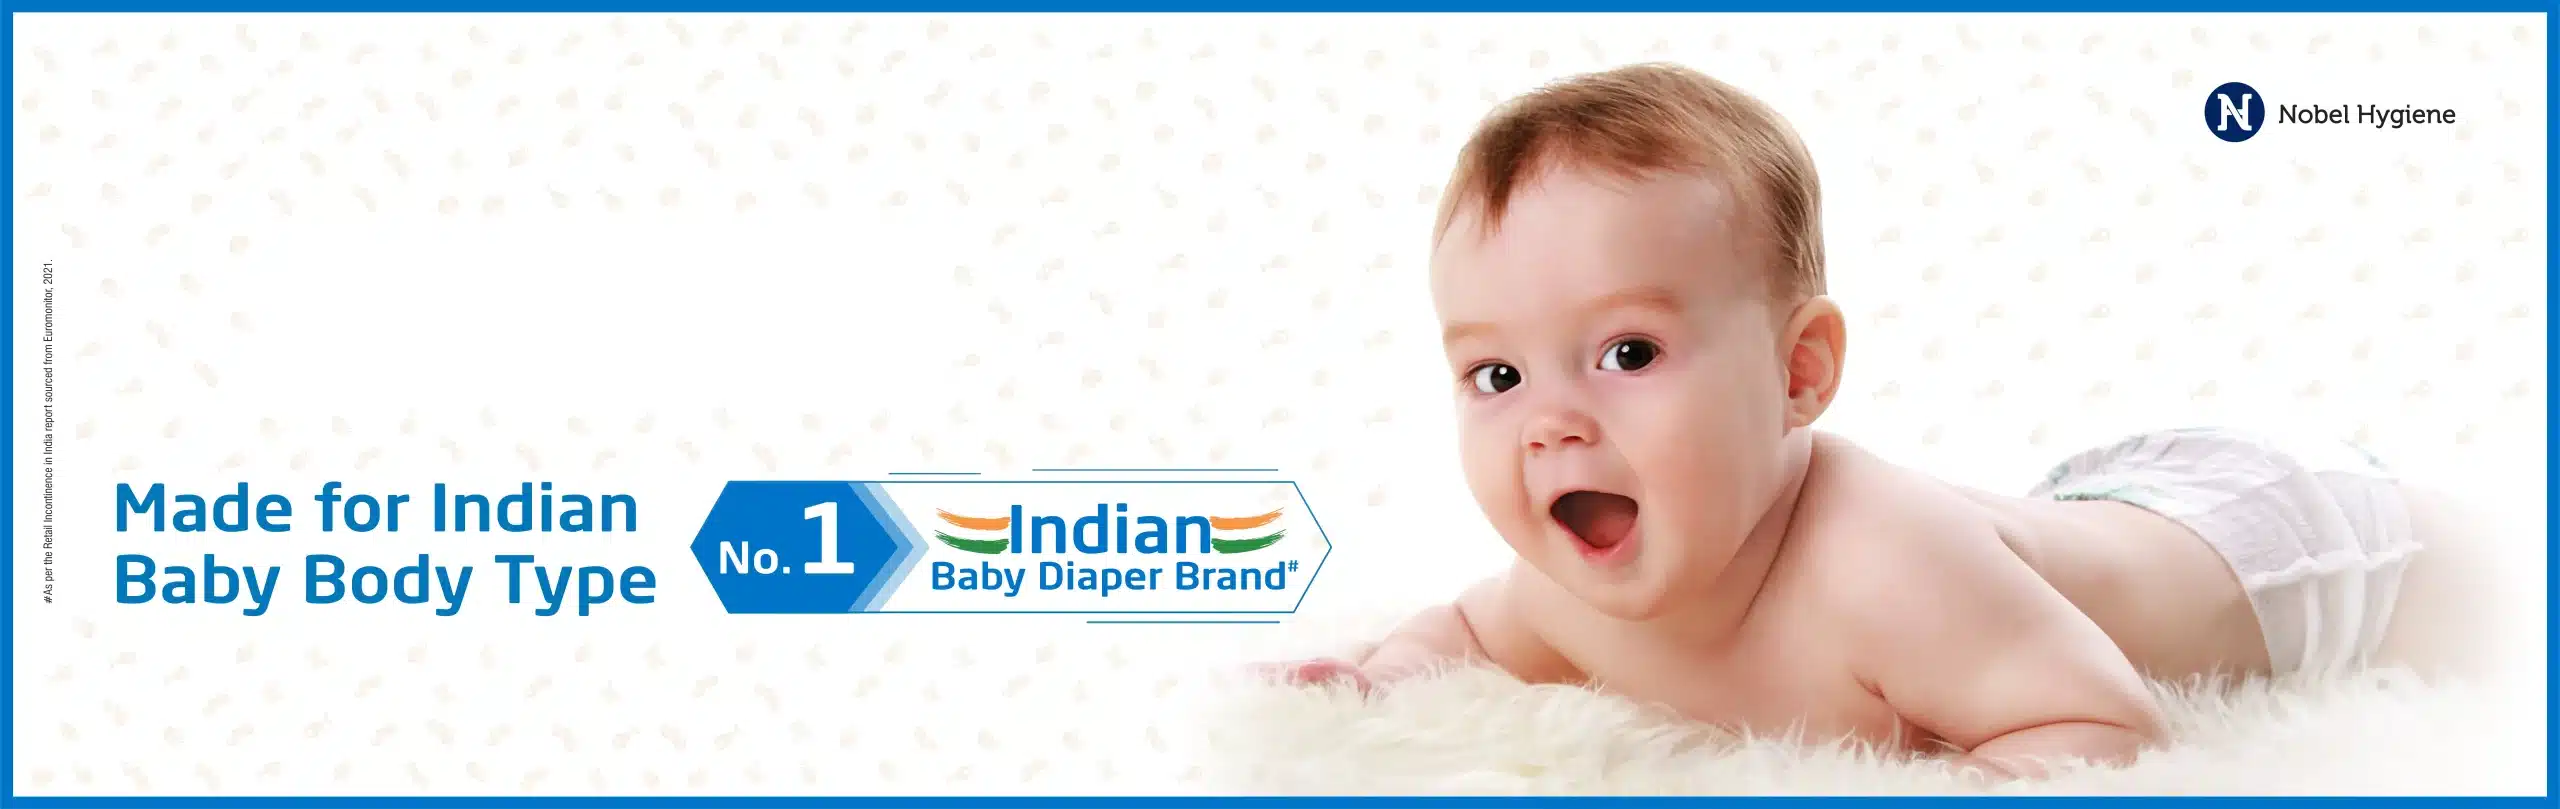 India's No. 1 Baby Diaper